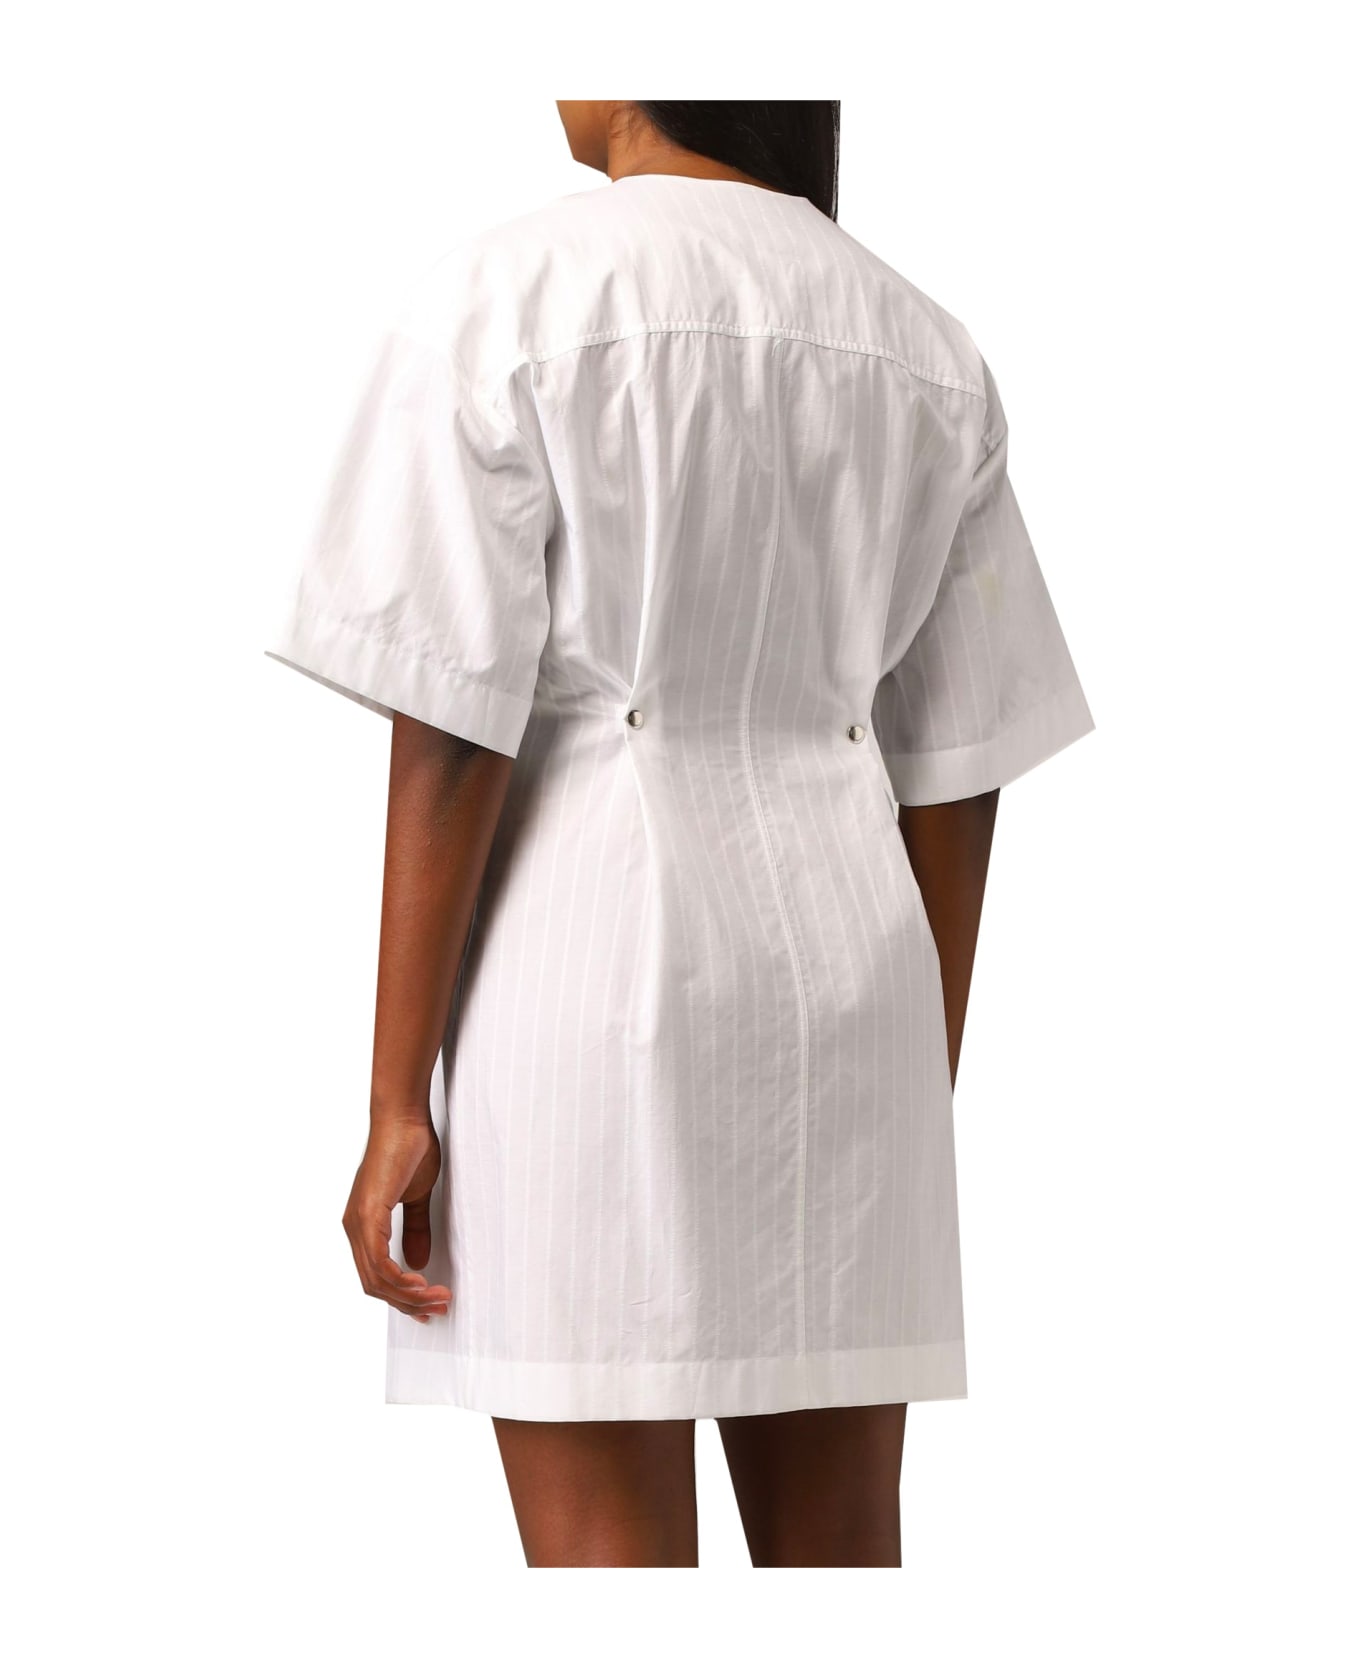 Givenchy Zipped Cotton Dress - White